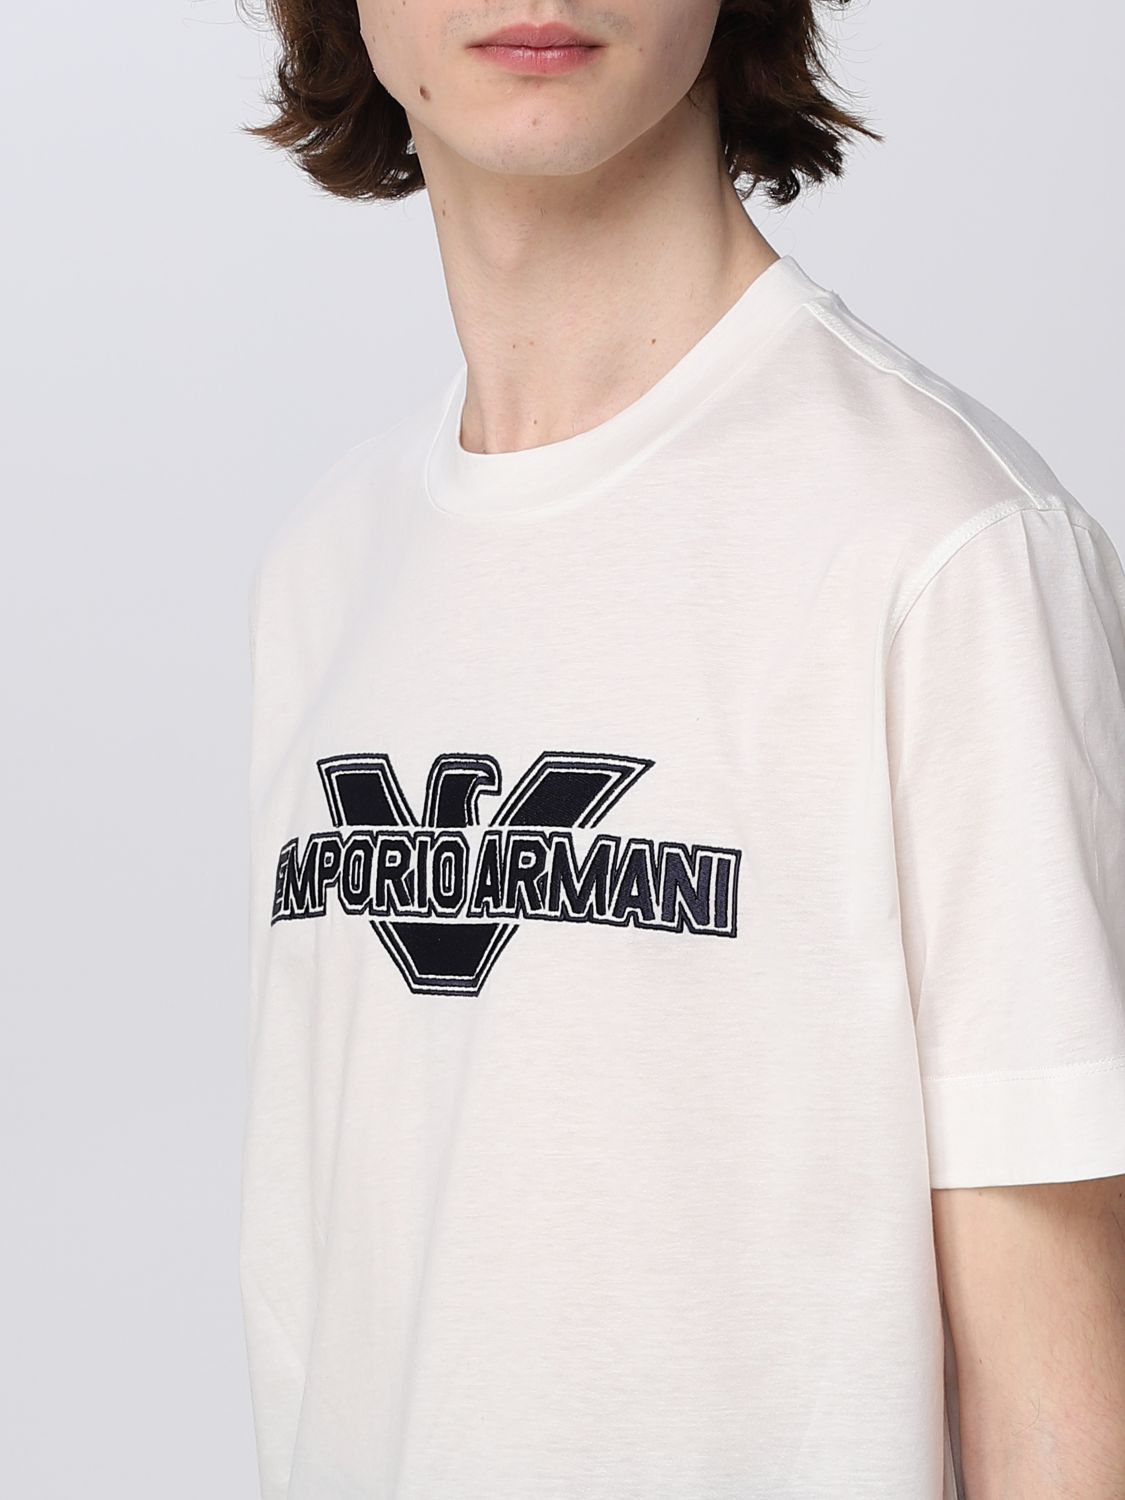 Koning Lear bagageruimte Op tijd EMPORIO ARMANI: T-shirt with eagle logo - White | Emporio Armani t-shirt  3R1TU81JSAZ online on GIGLIO.COM